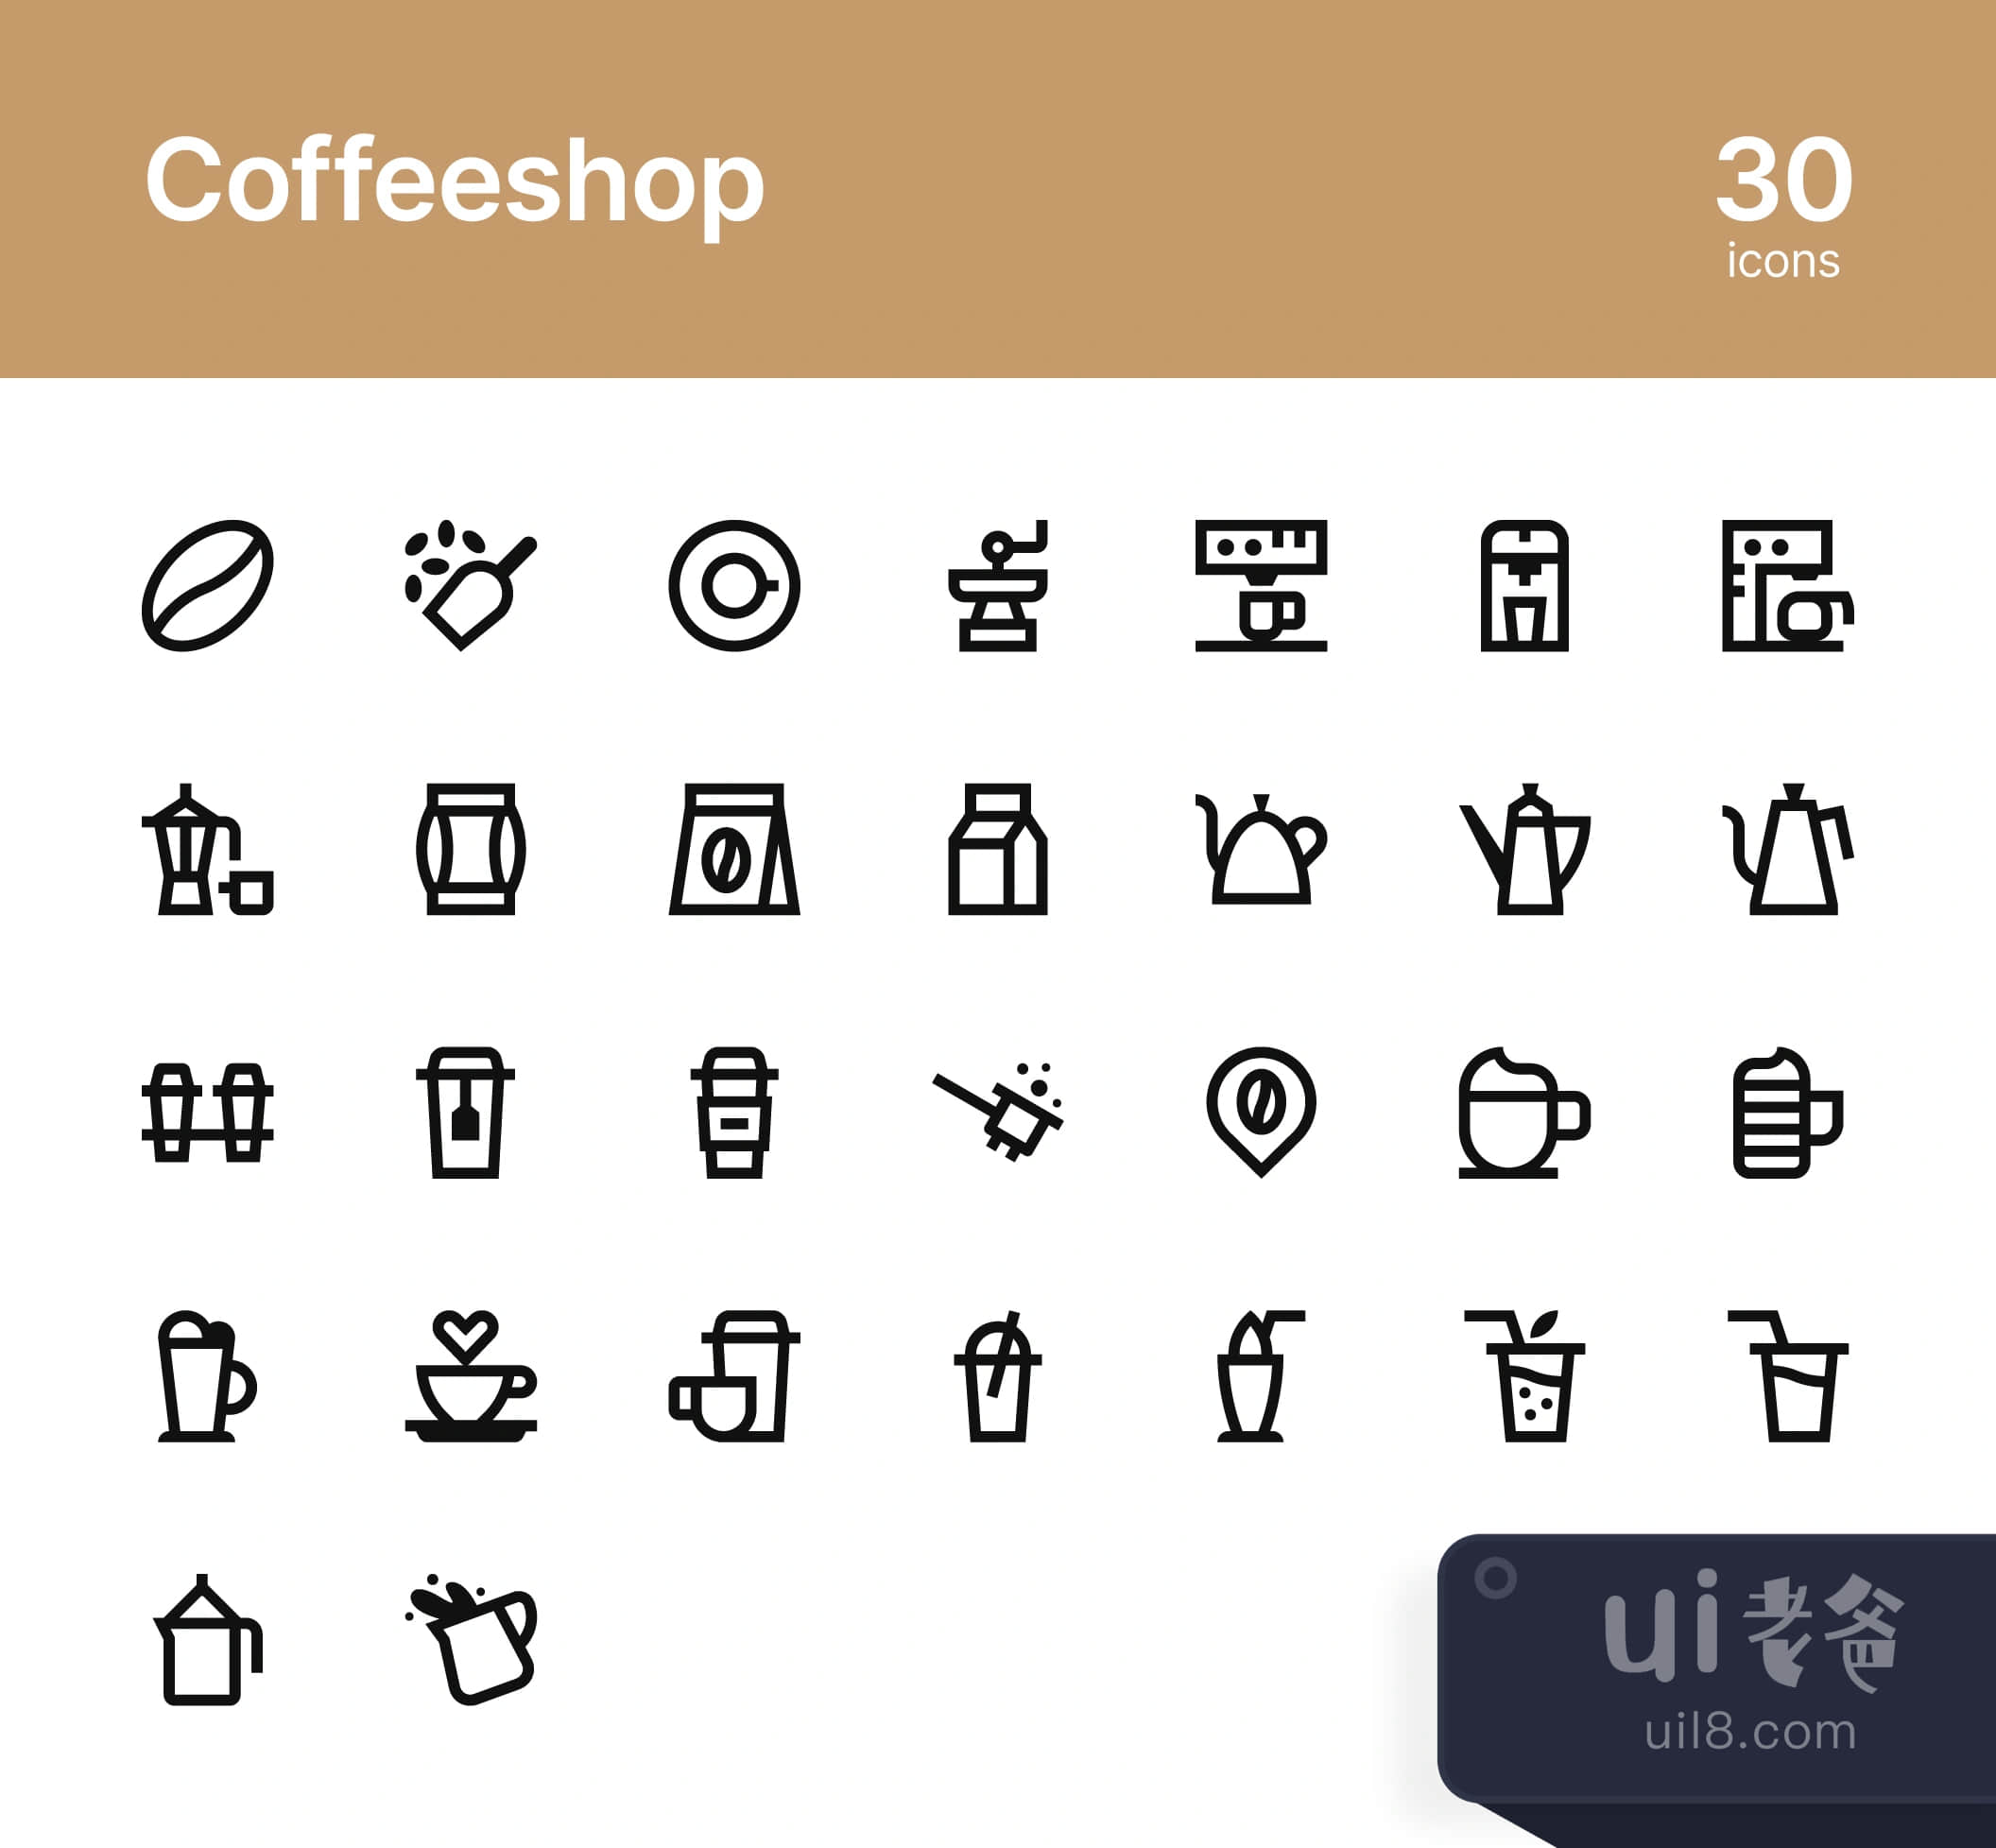 咖啡馆图标 (Coffeeshop icons)插图1